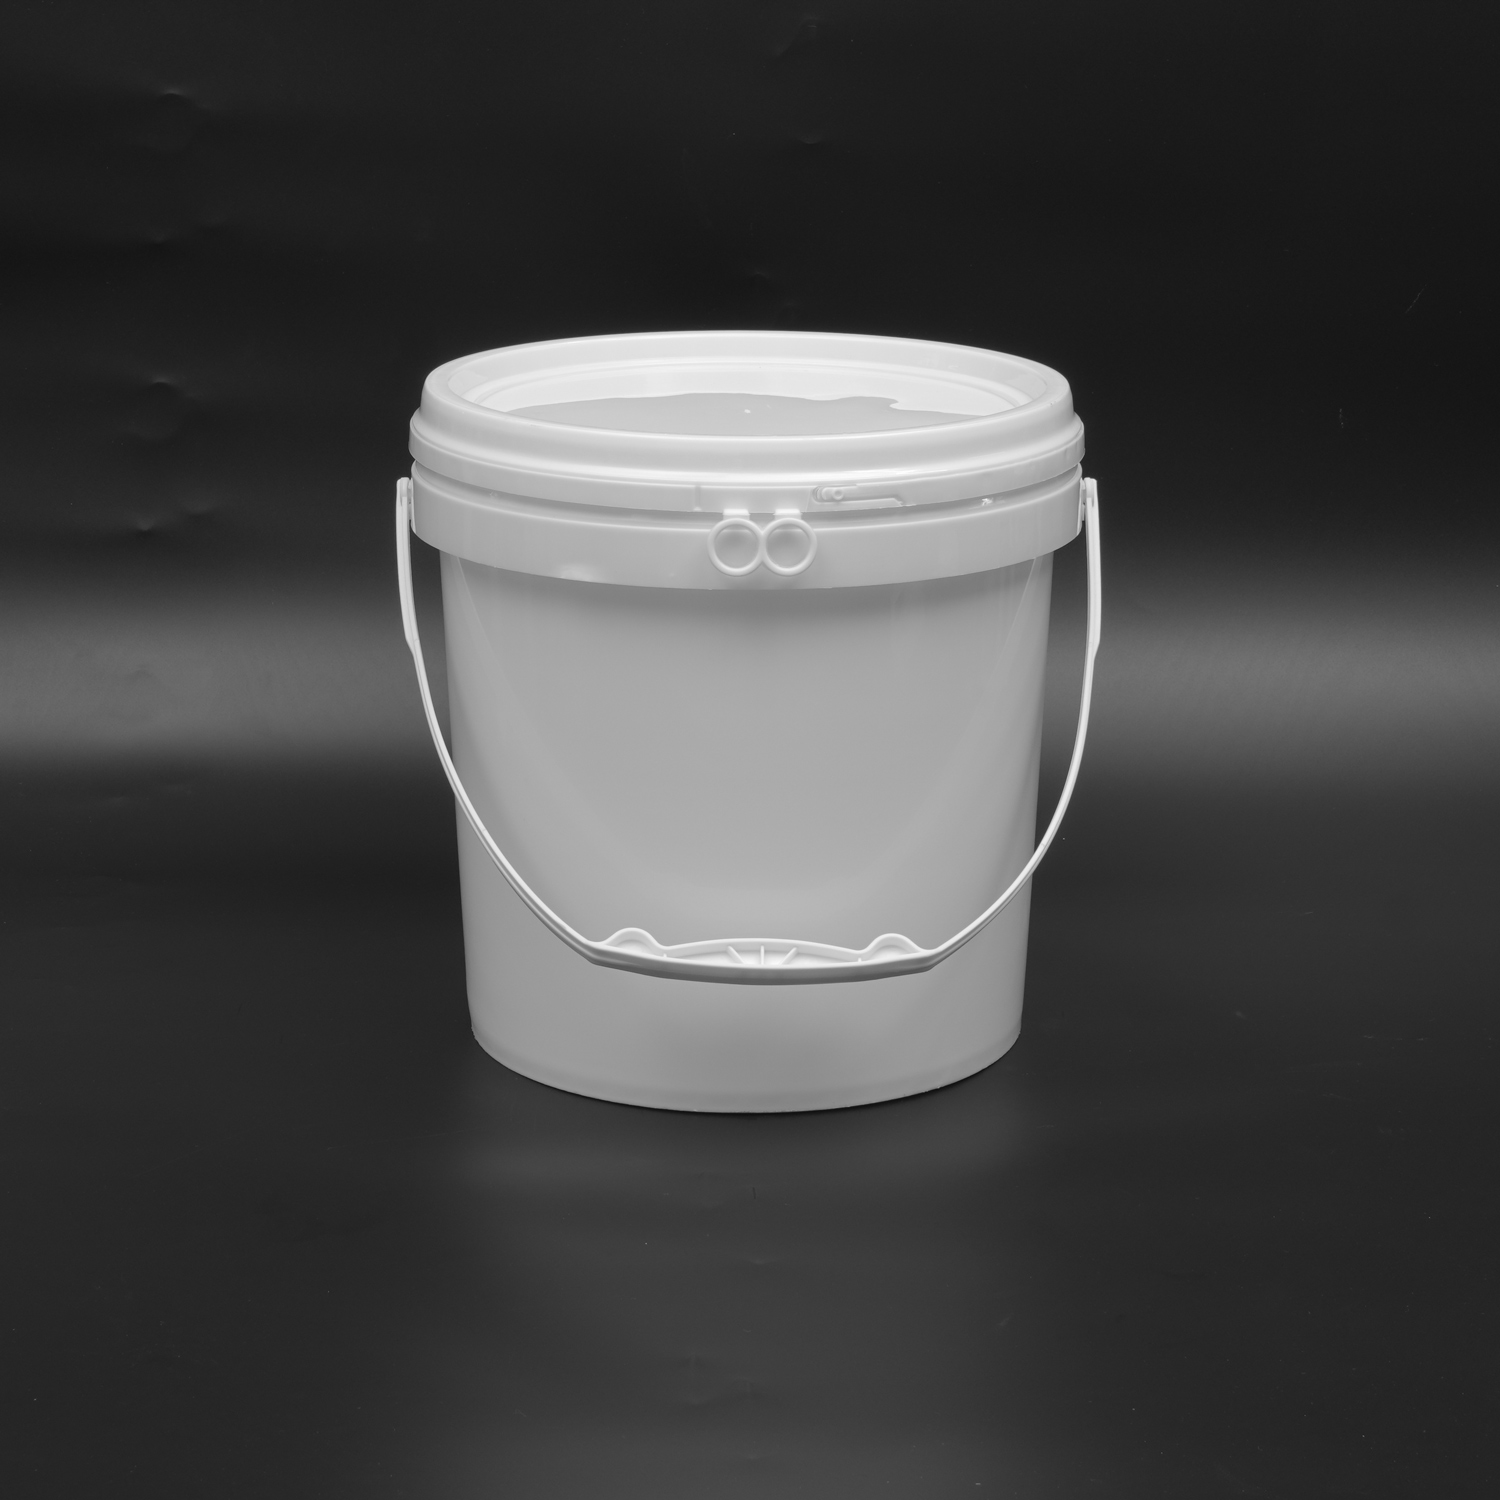 10L PP Bucket B17-NR para tinta básica de água contendo